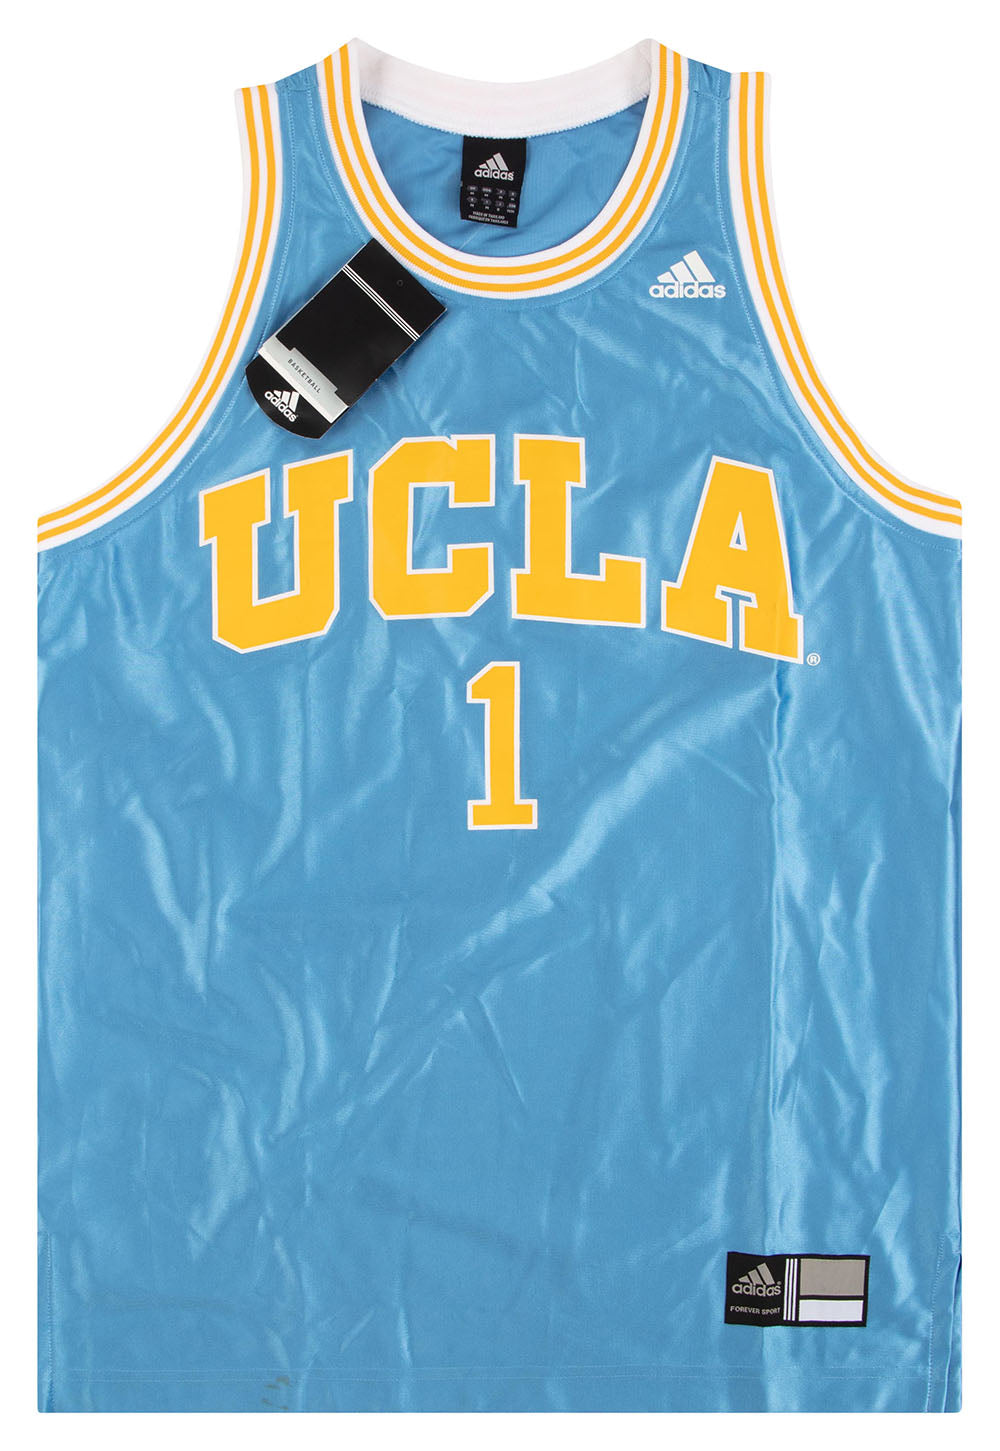 UCLA Bruin Jerseys